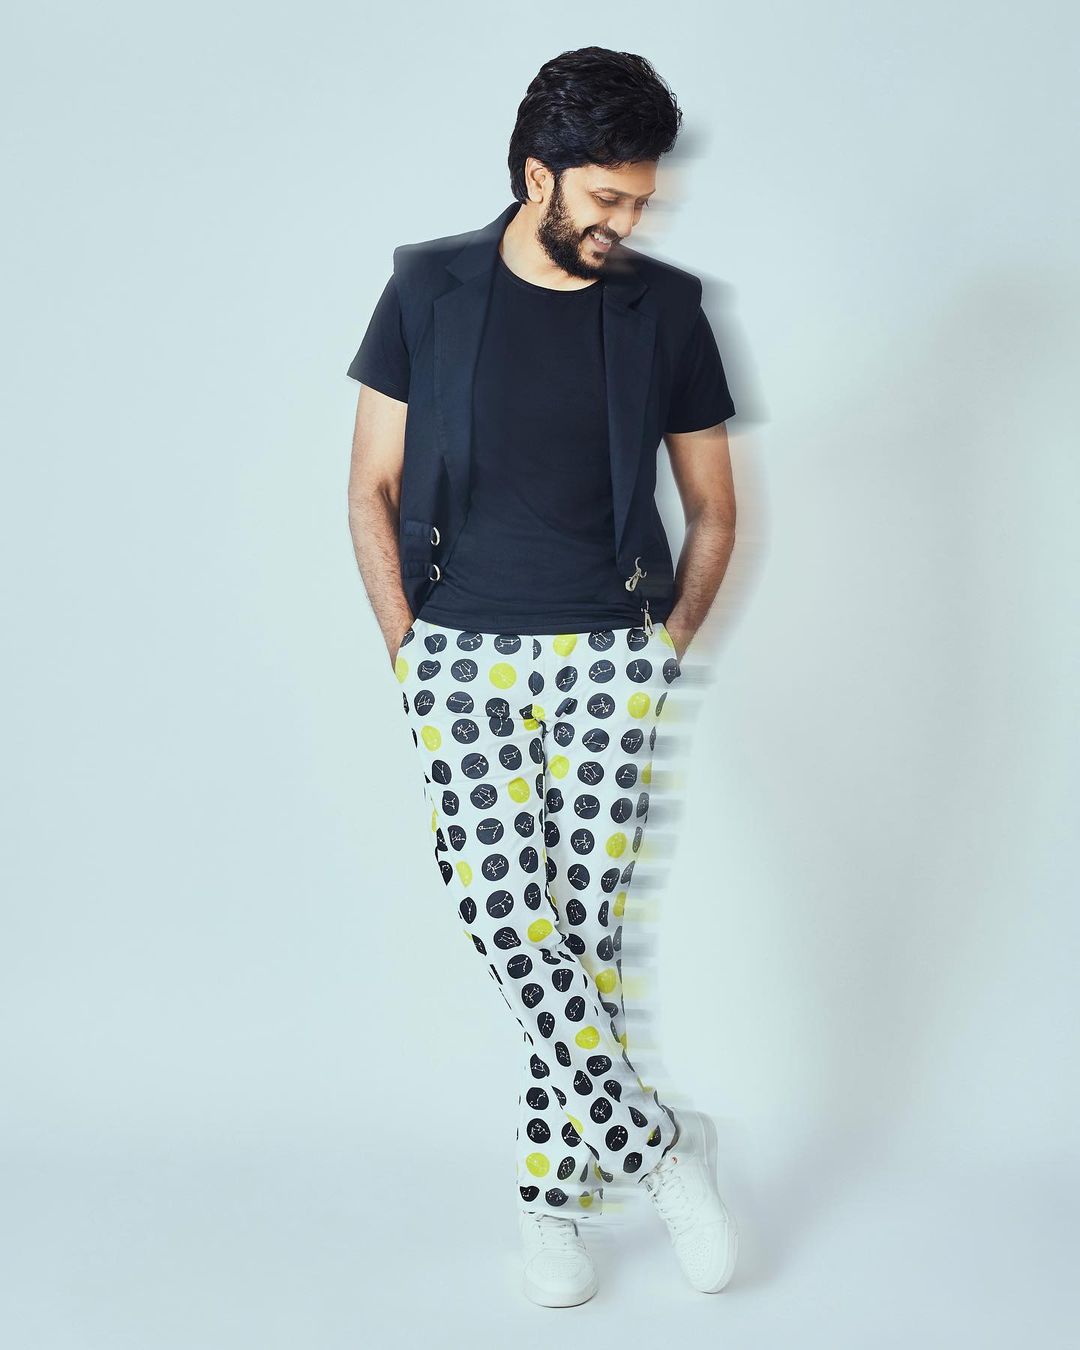 Riteish Deshmukh adds a pop of color to his ensemble designed by Crimsoun Club.